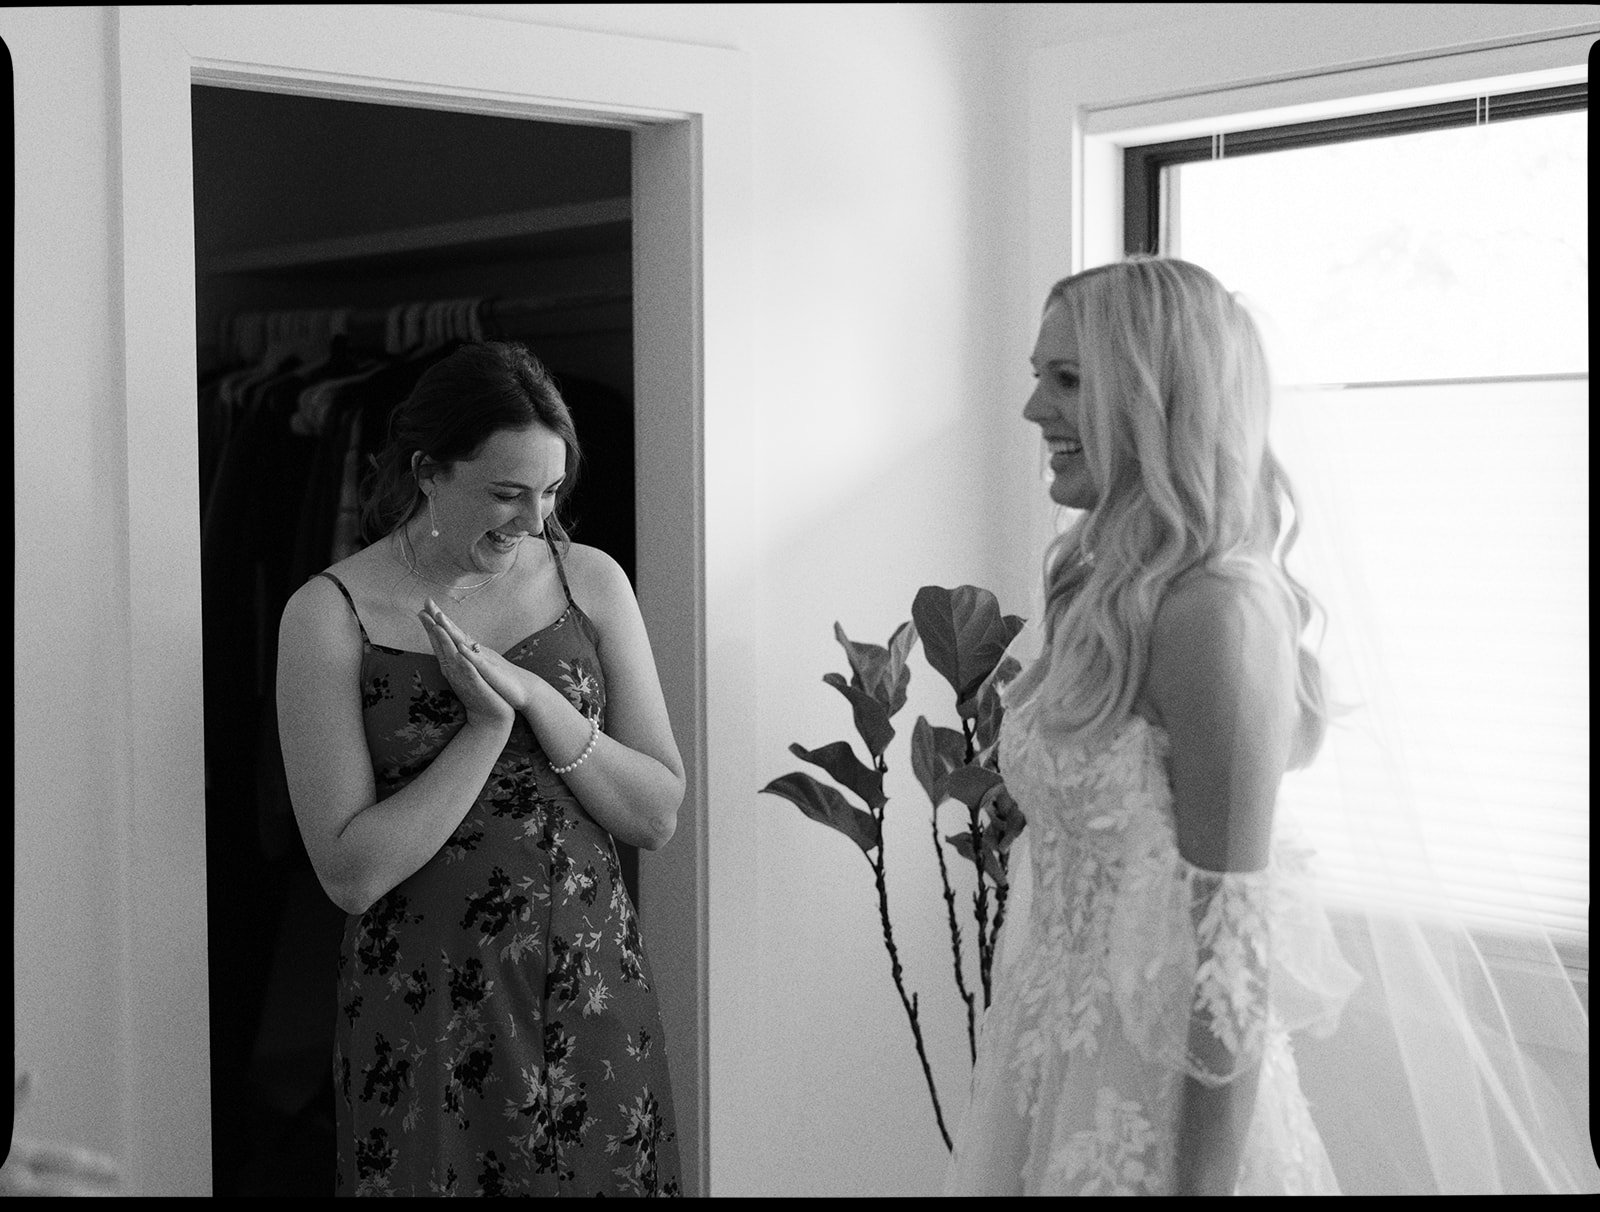 Best-Austin-Wedding-Photographers-Elopement-Film-35mm-Asheville-Santa-Barbara-Backyard-12.jpg